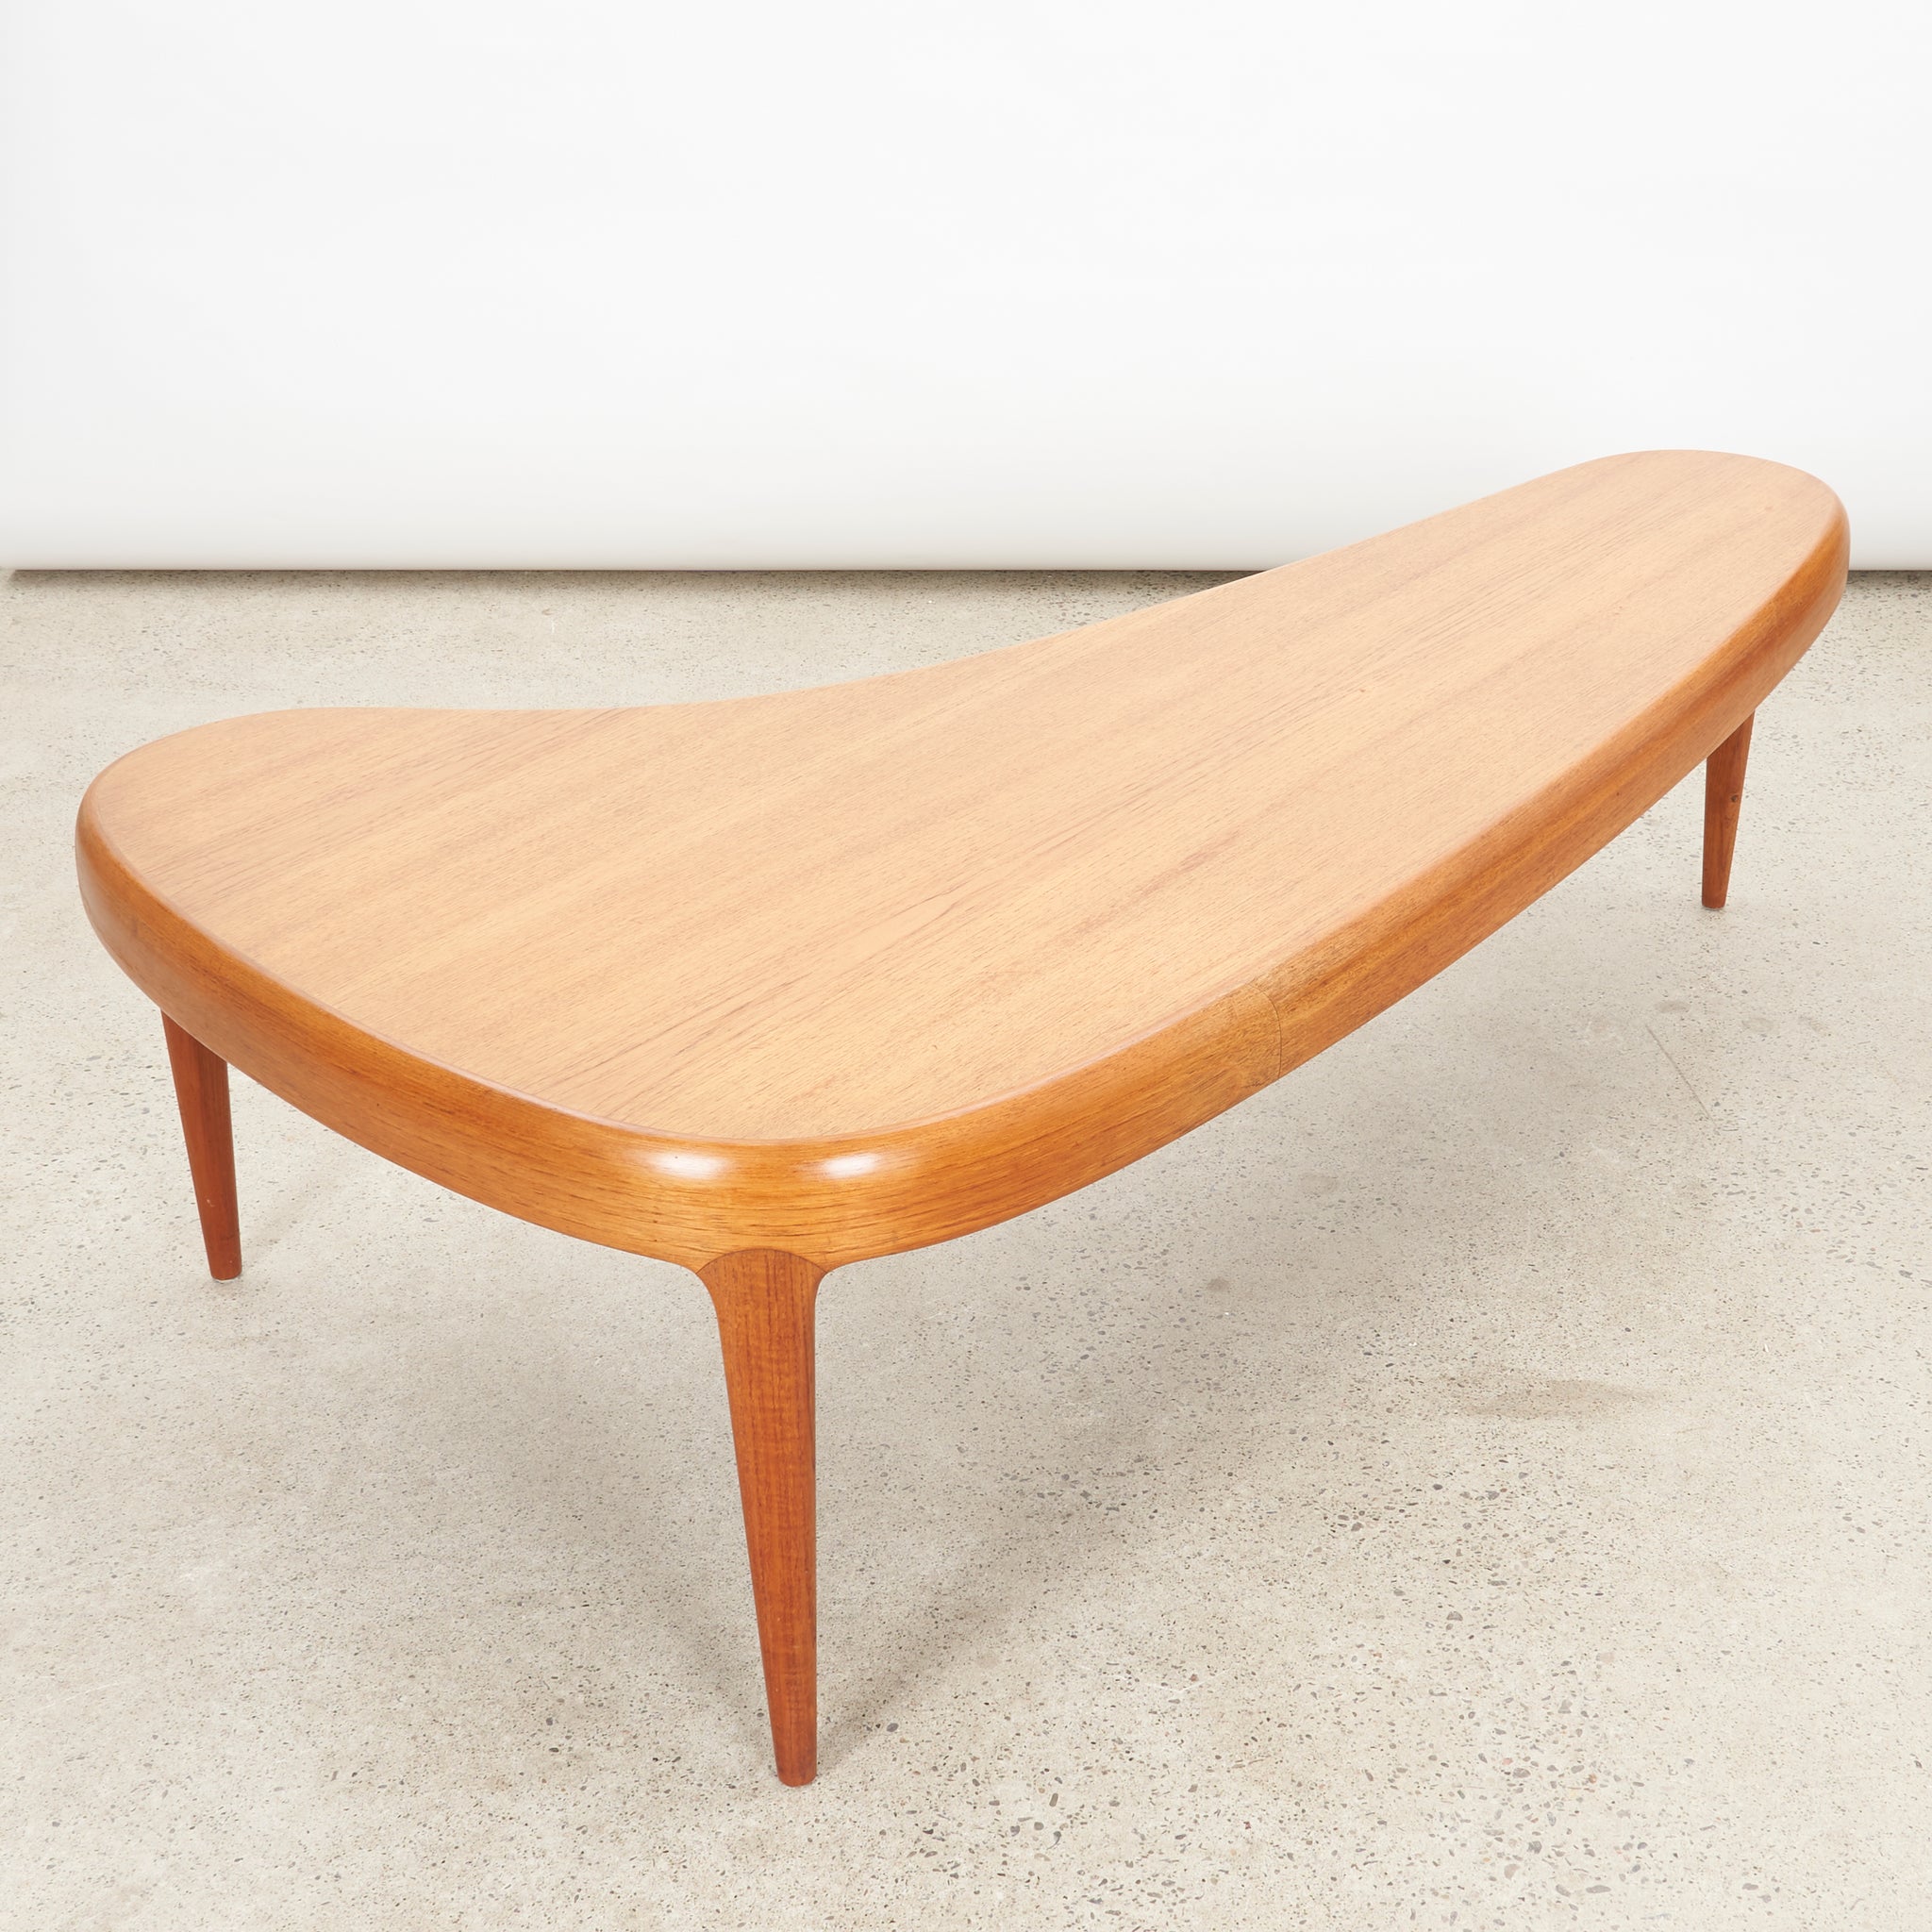 'Capri' Kidney Shaped Teak Coffee Table by Johannes Andersen for Trensum Möbelfabrik, Sweden. Vintage furniture. Danish design. Mid-century modern. Scandinavian modern.